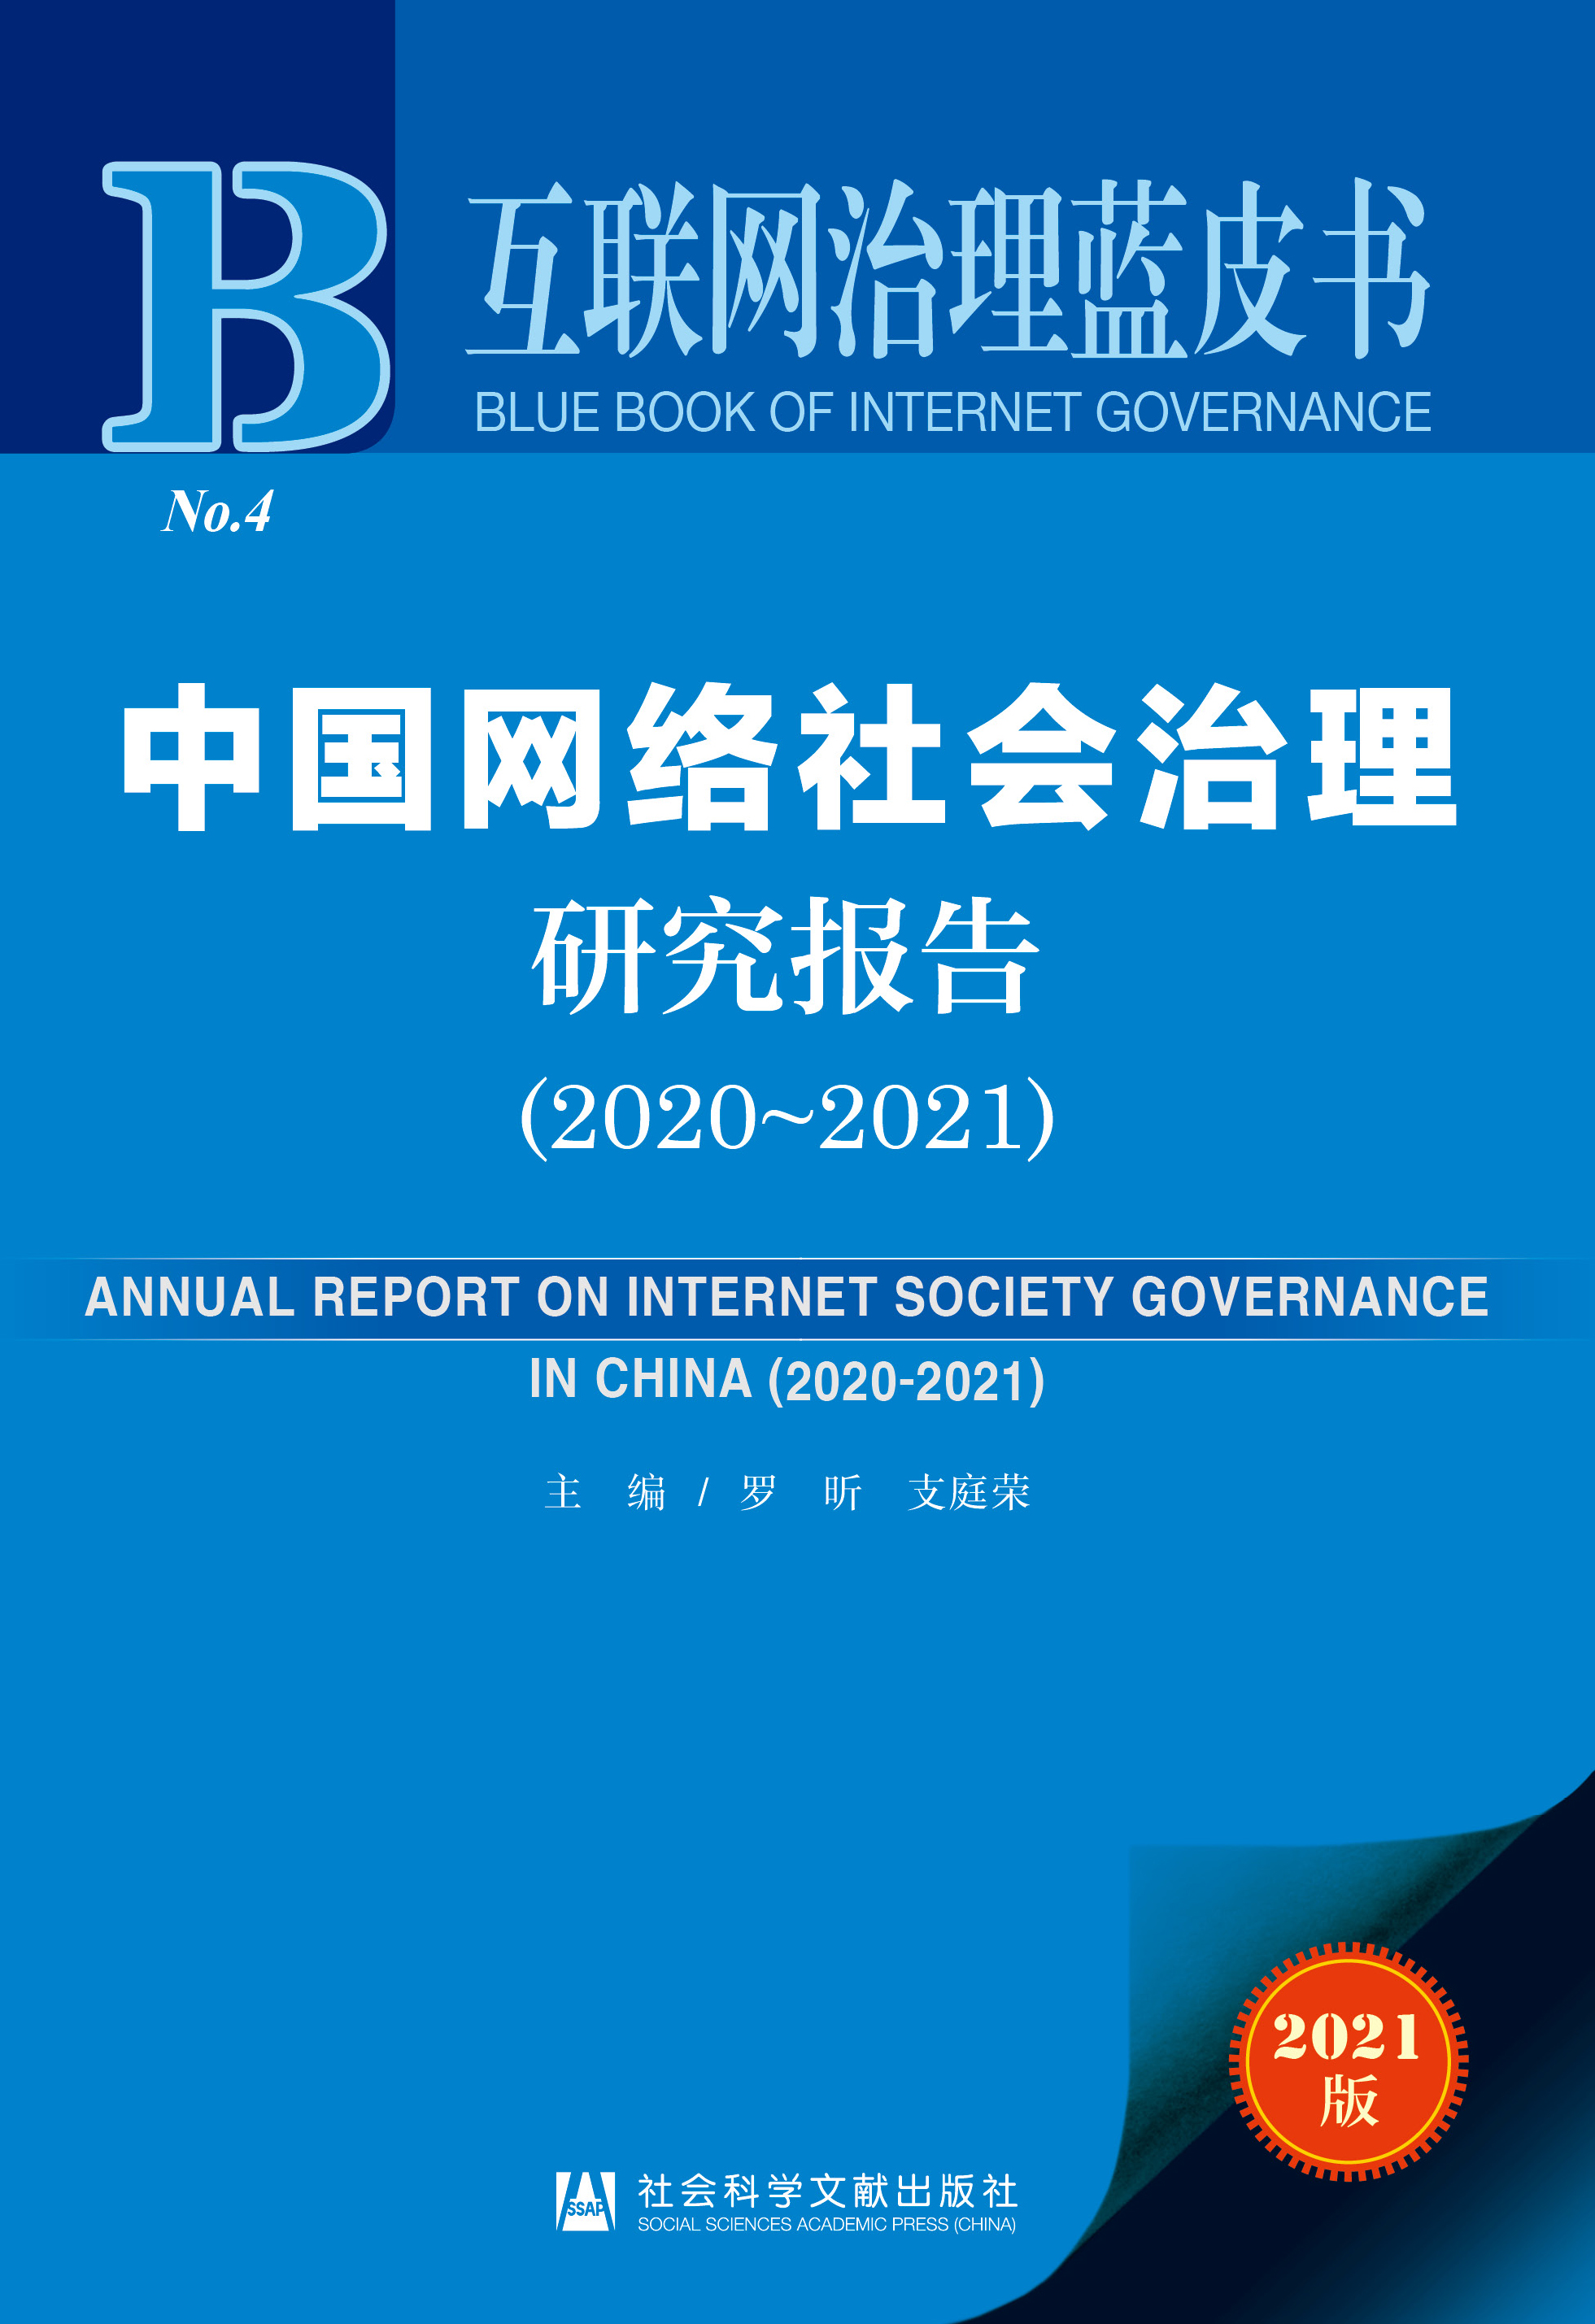 中国网络社会治理研究报告 = Annual report on internet society governance in China. 2020-2021 / 主编: 罗昕, 支庭荣